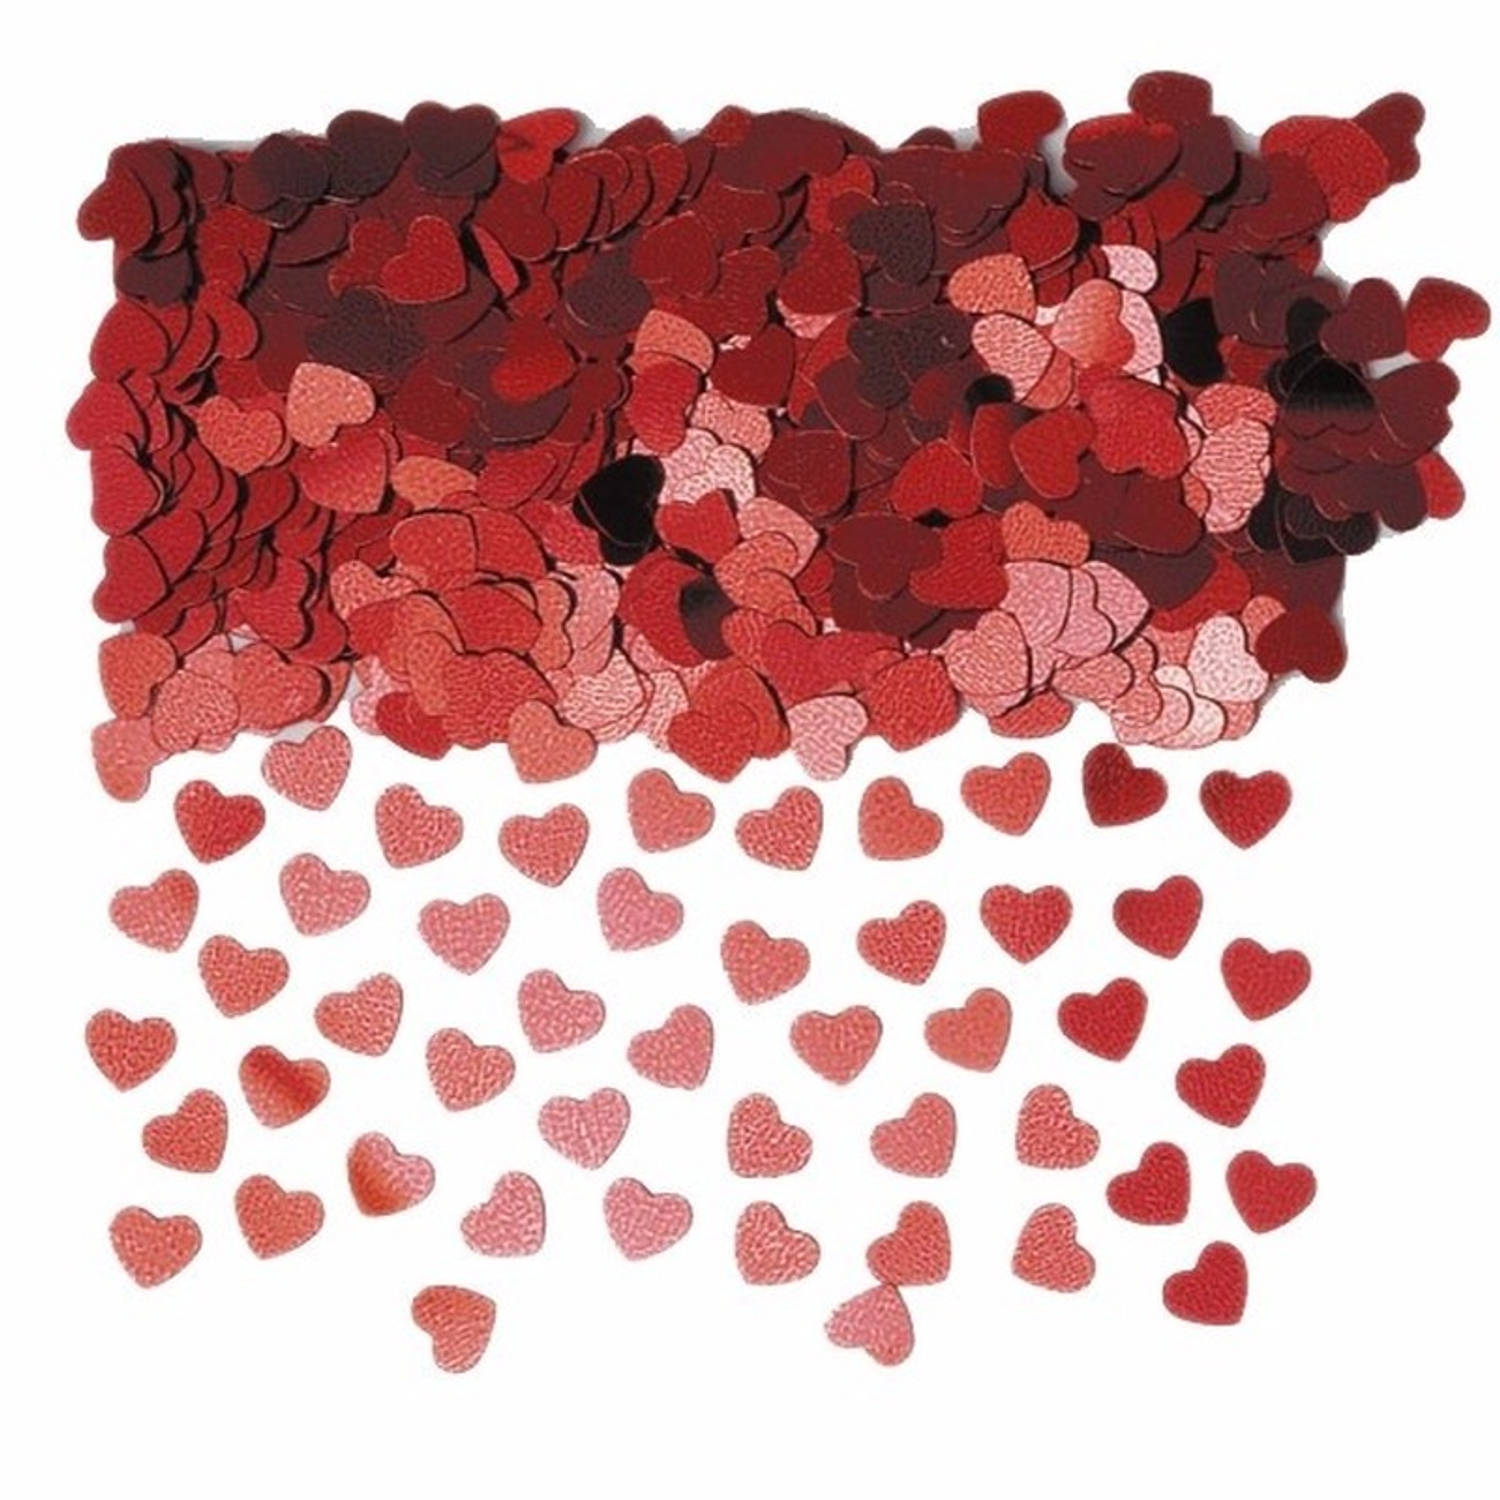 Confetti 15gr hartjes rood